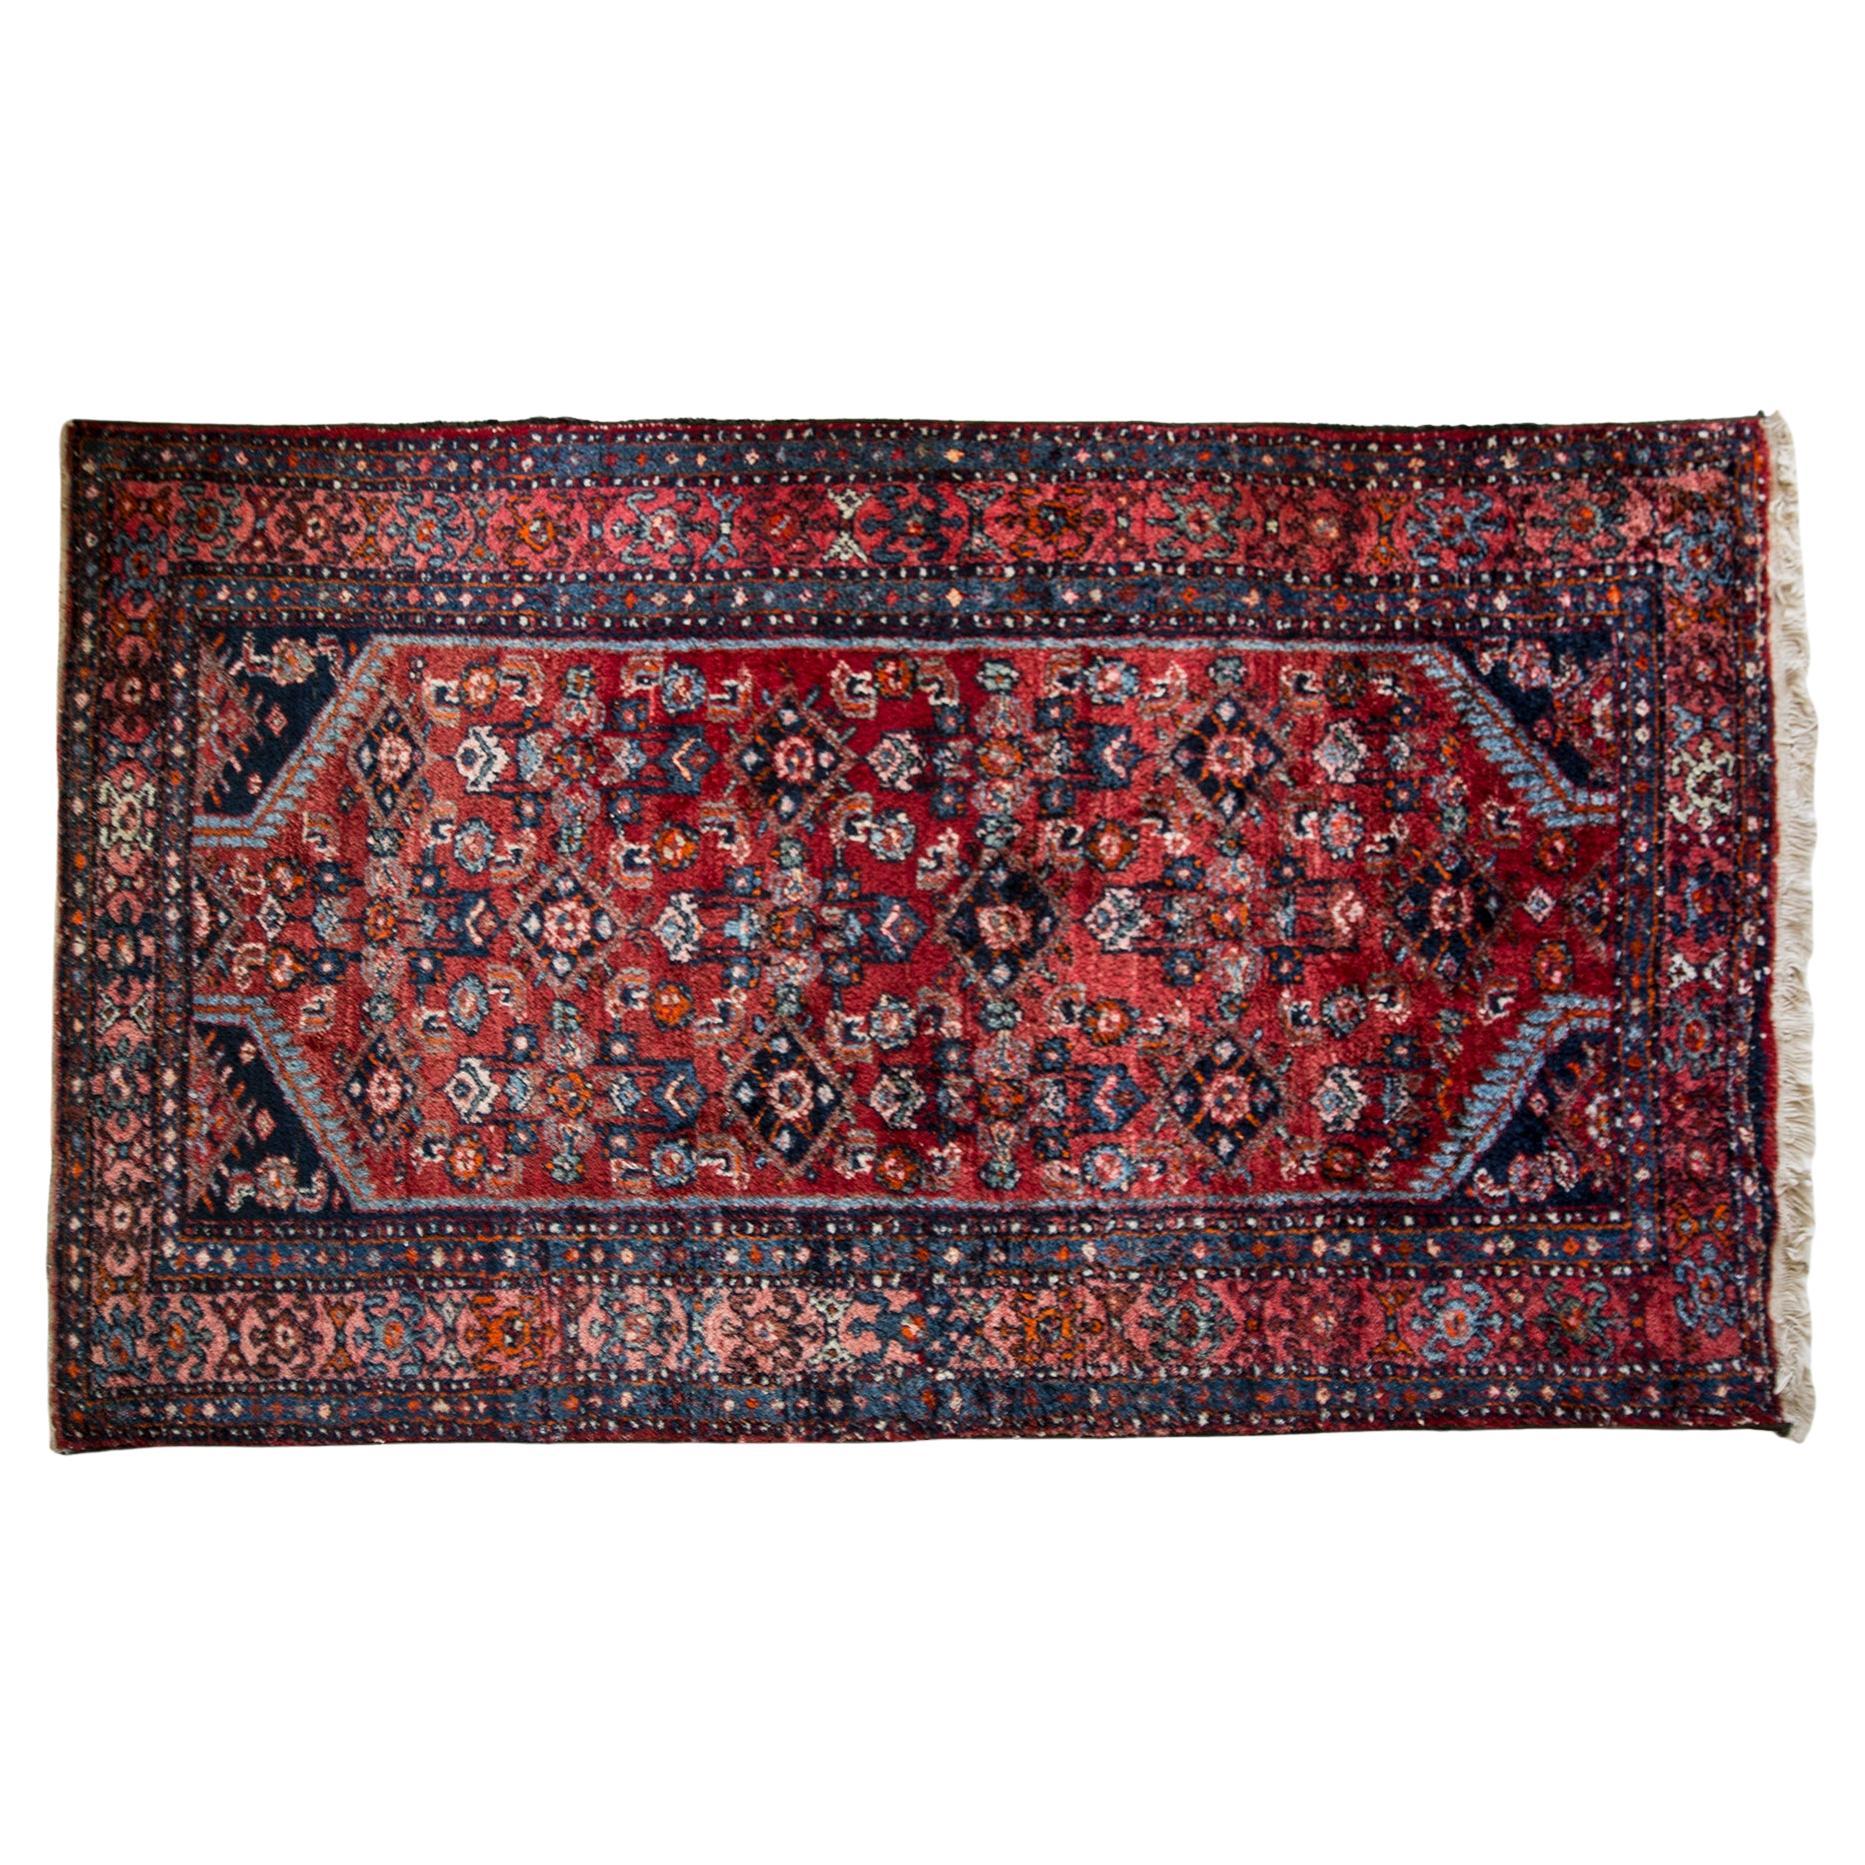 Mid Century Wool Carpet, France, Europe, 1960s